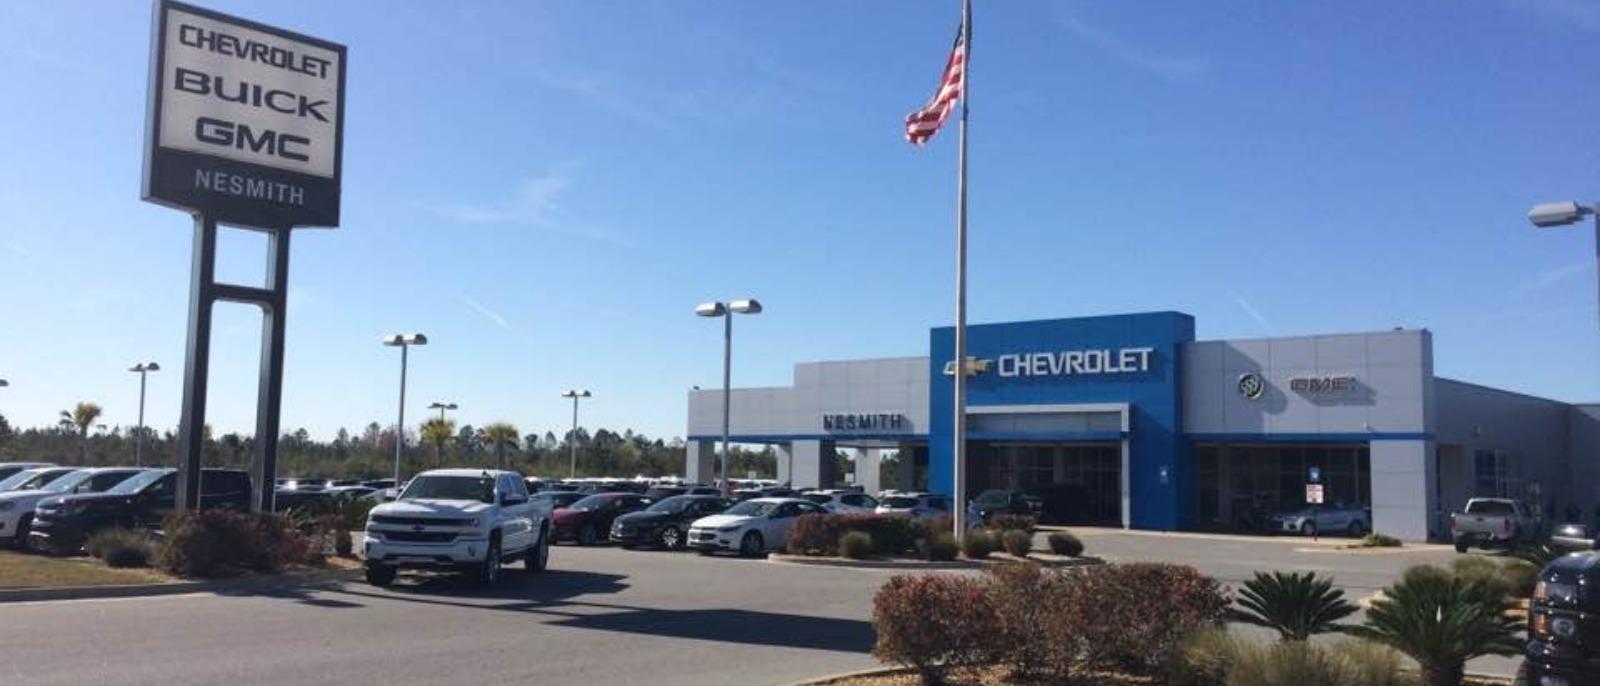 Chevrolet Car Dealership Cars For Sale Nesmith Jesup GA